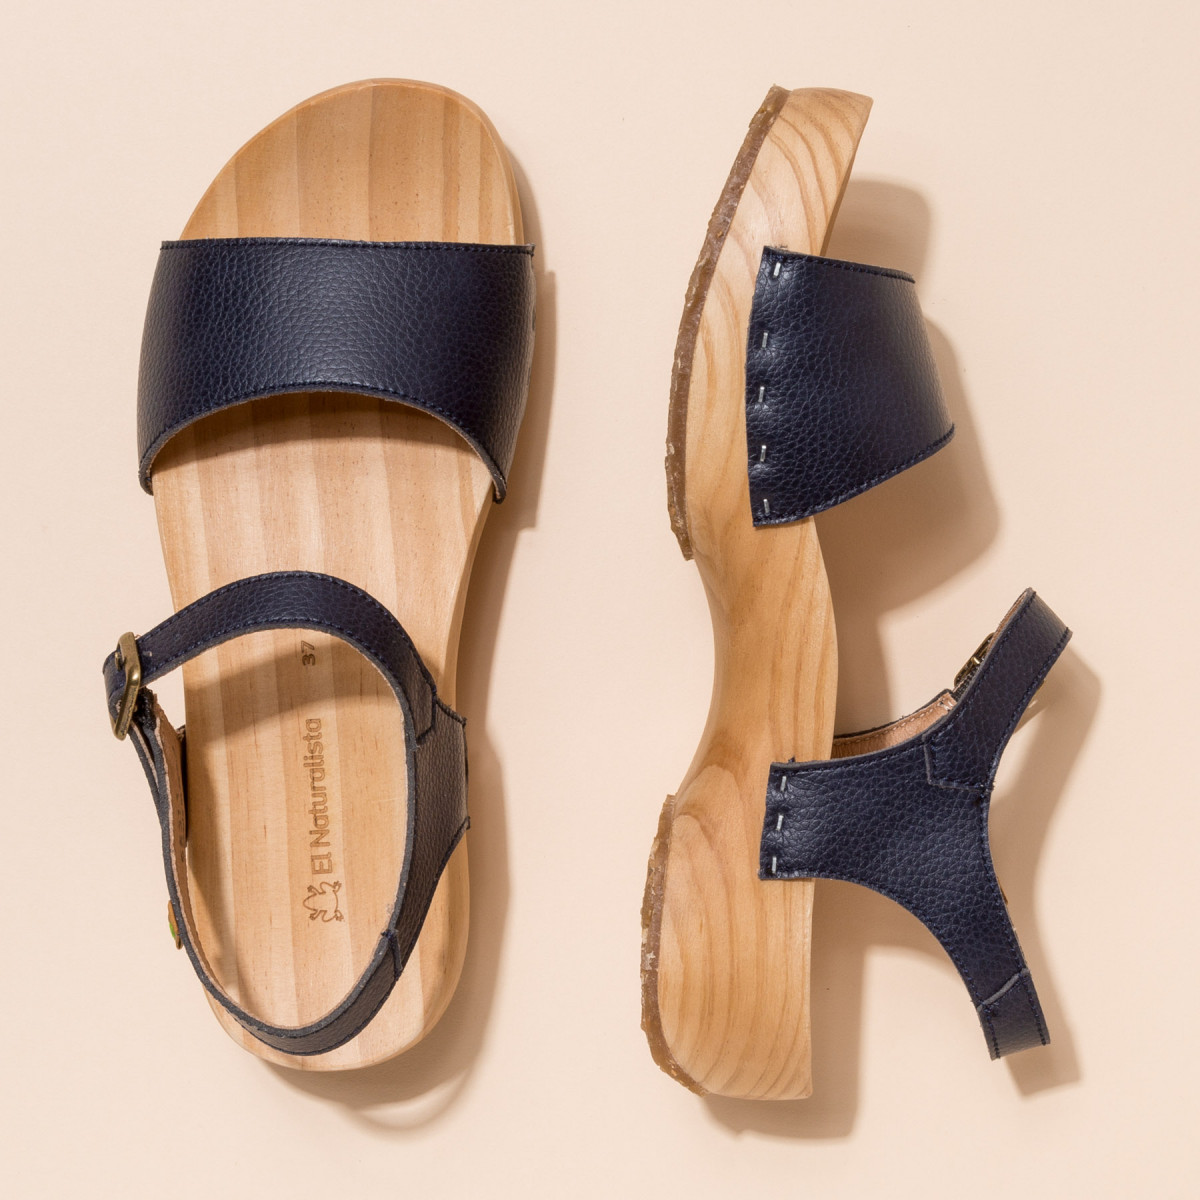 Sandales confortables véganes à plateforme en bois de pin naturel - Bleu Marine - El naturalista